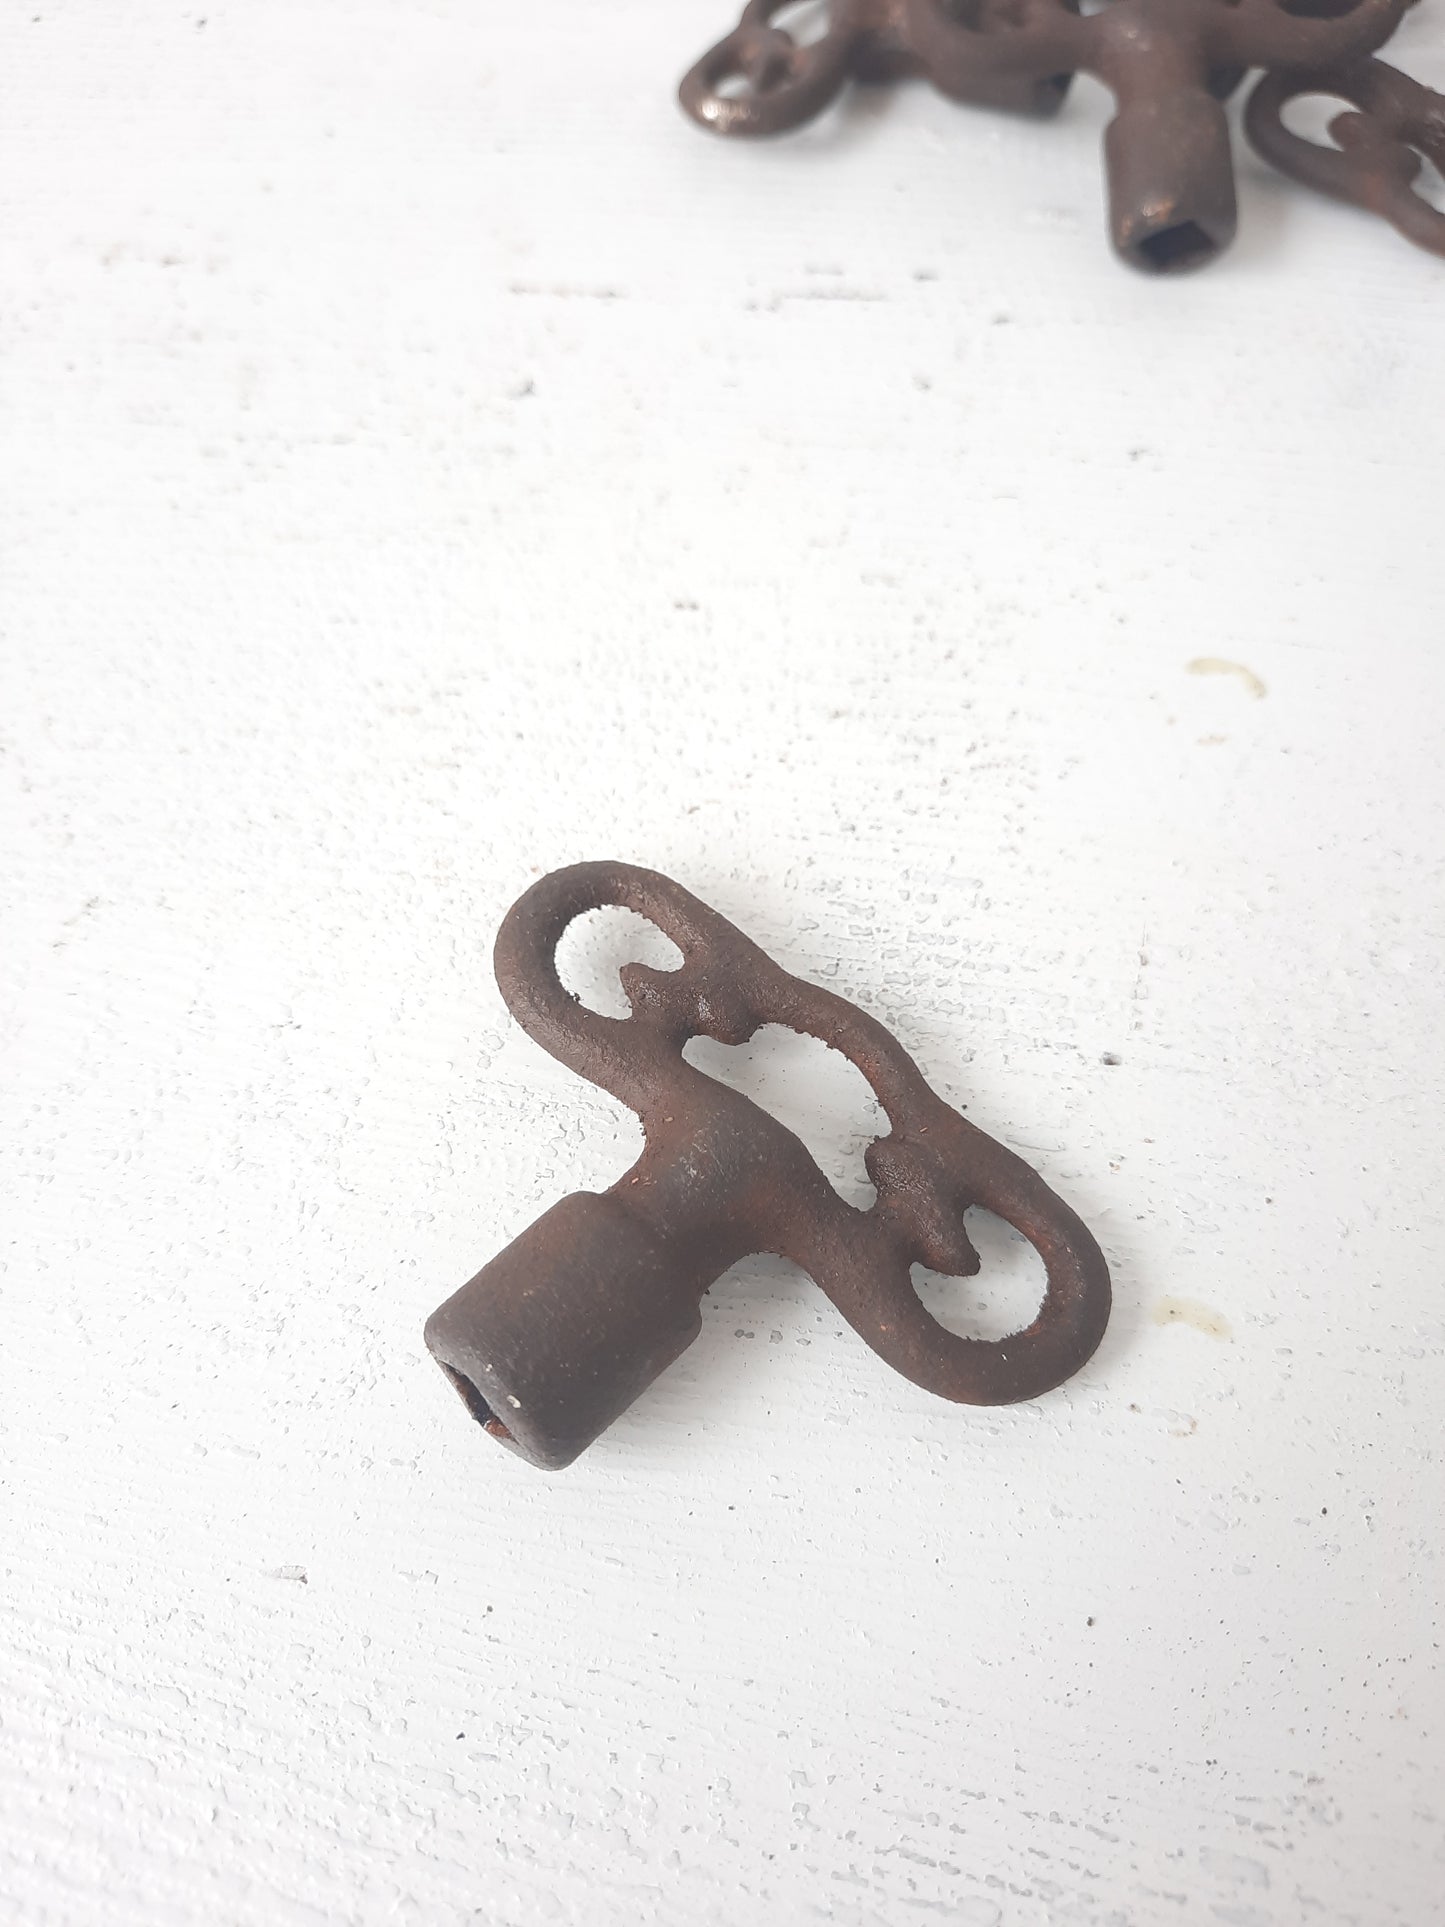 One Antique Radiator Key, Cast Iron Key for Bleed Valve